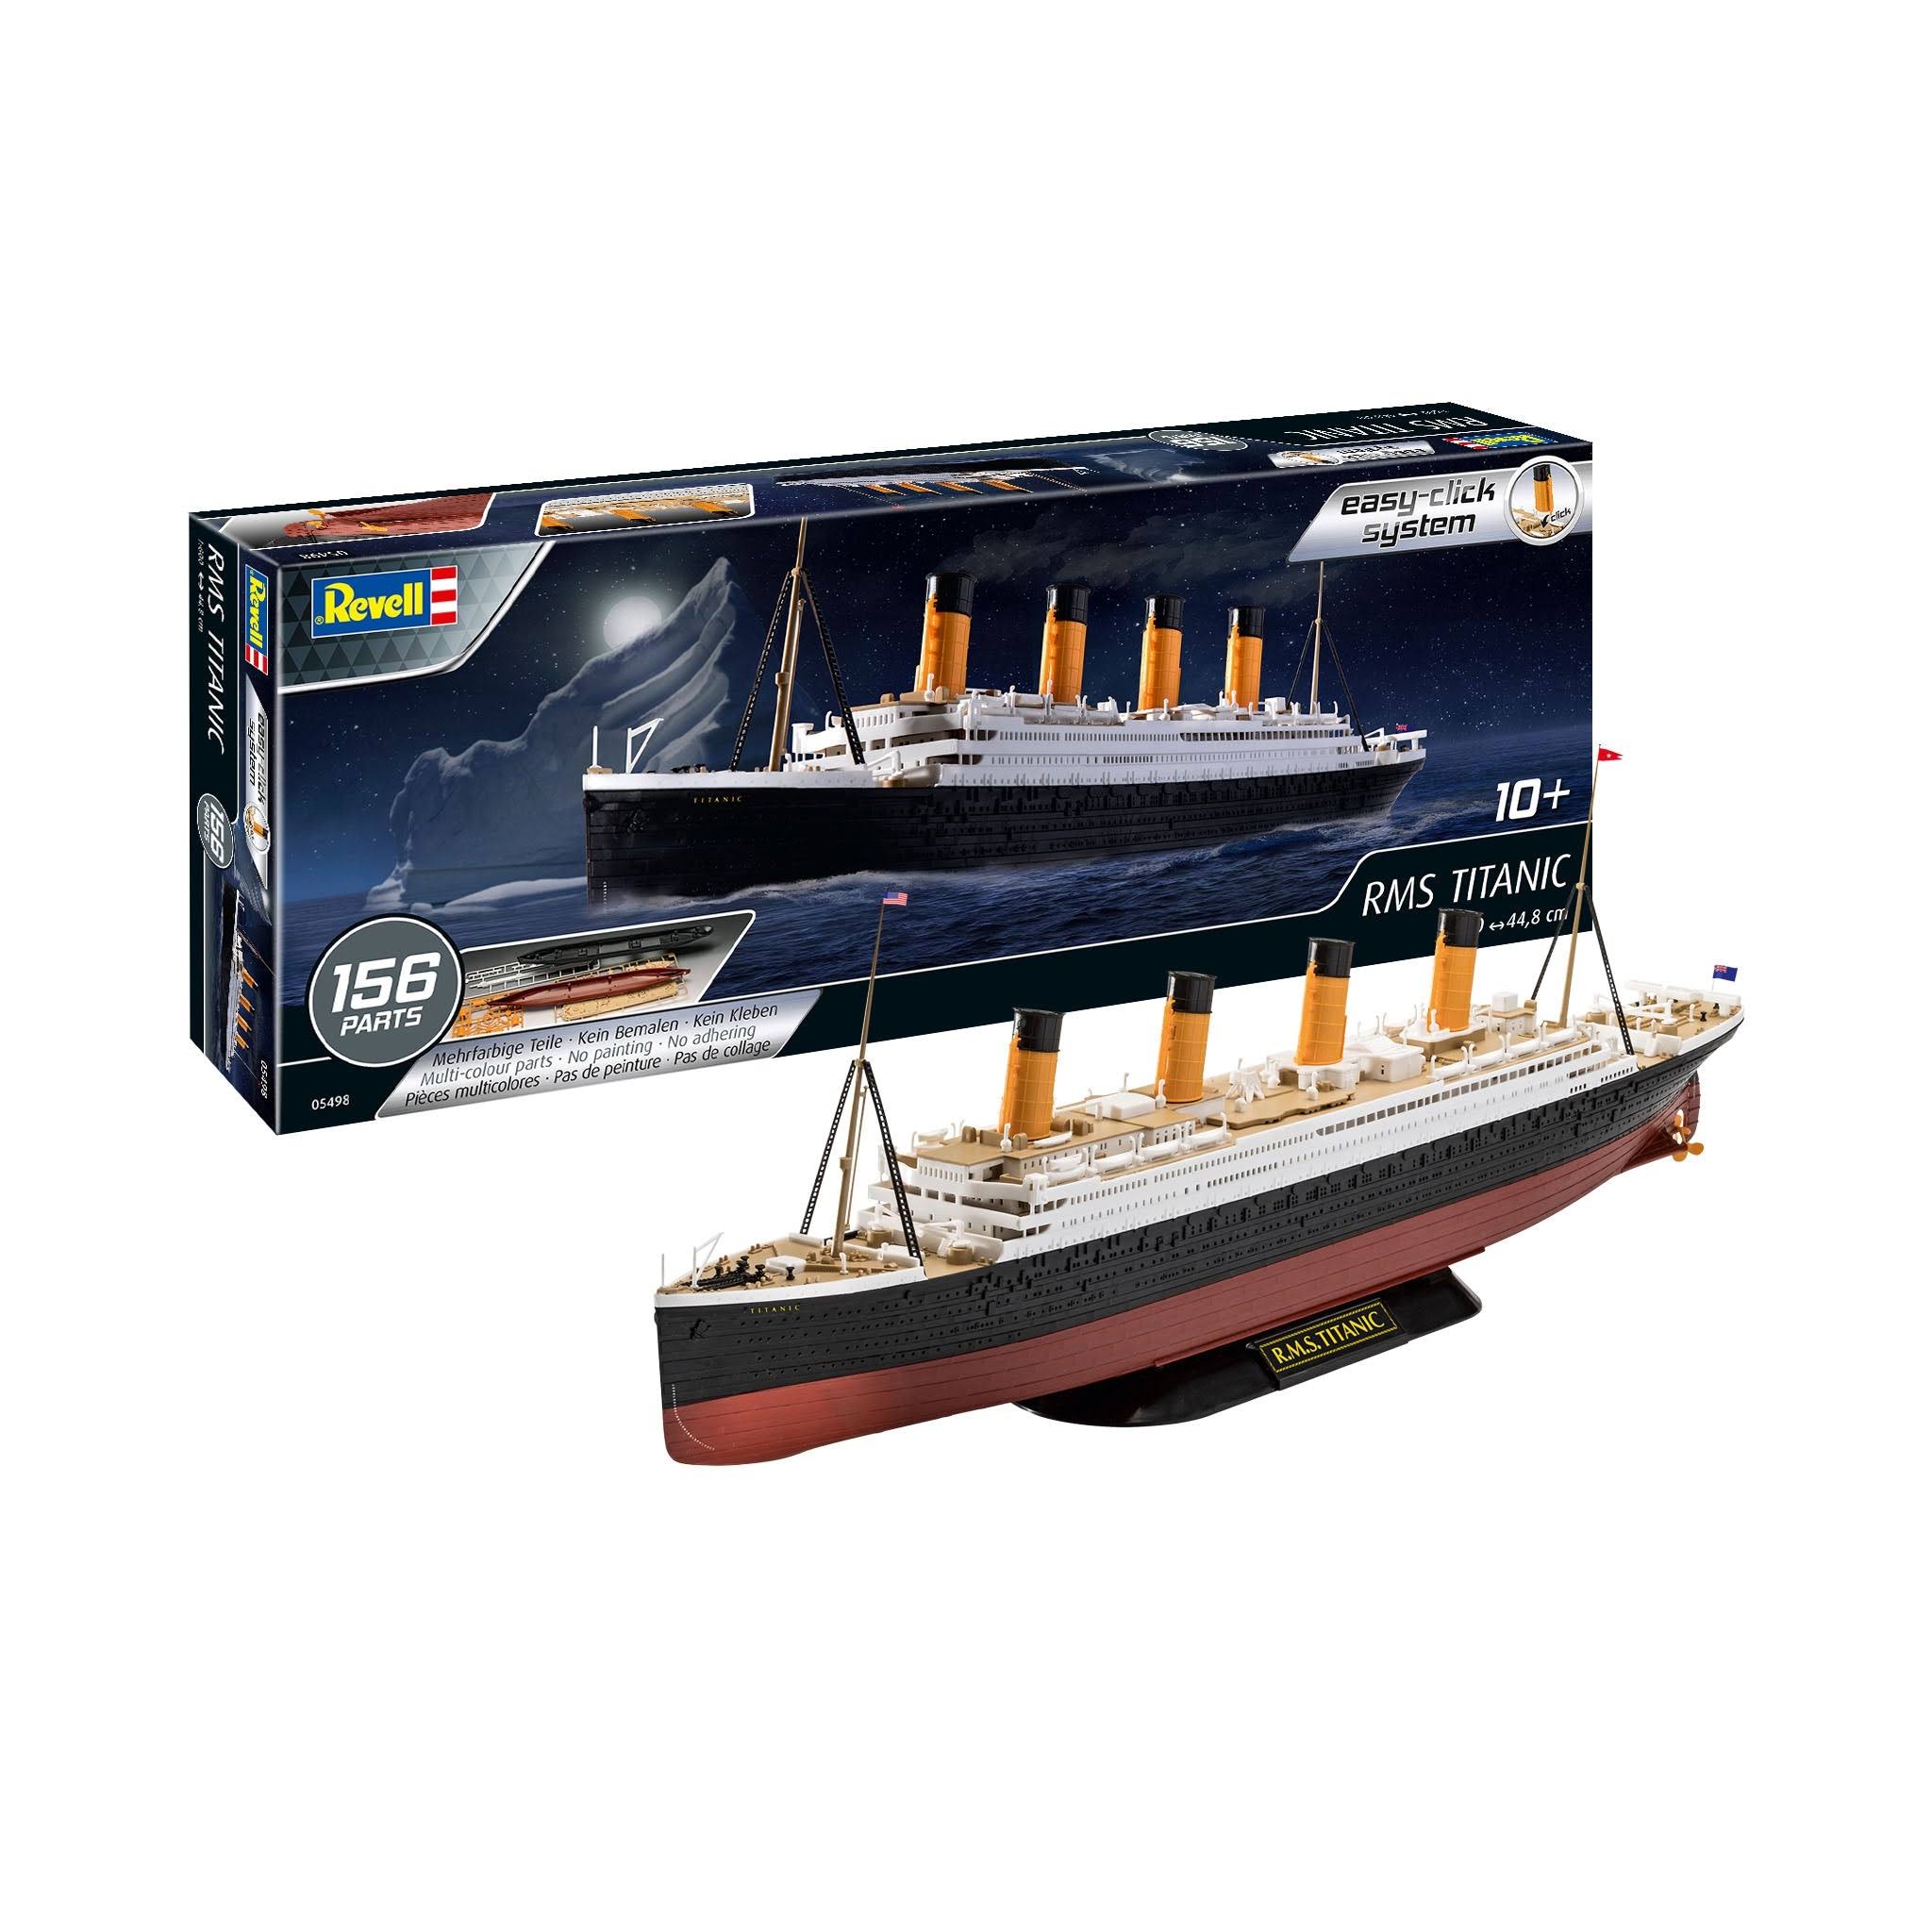 Revell RMS Titanic Easy Click System Model Ship Kit